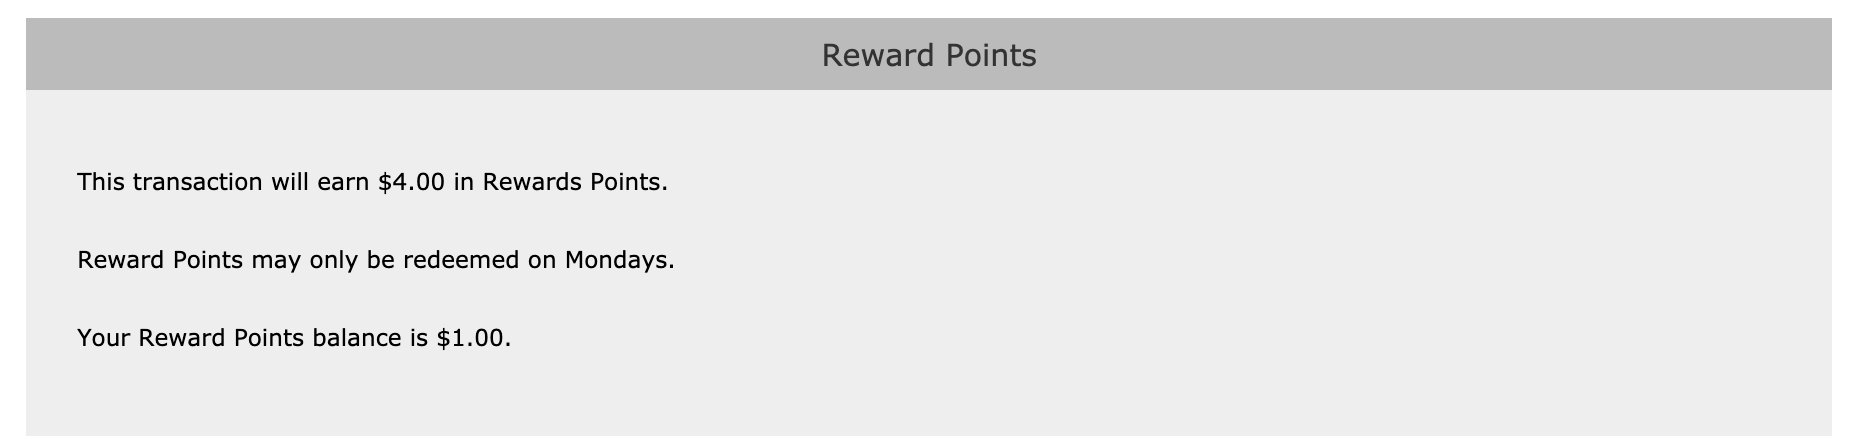 Zen Cart Reward Points showing on payment page - no redemption